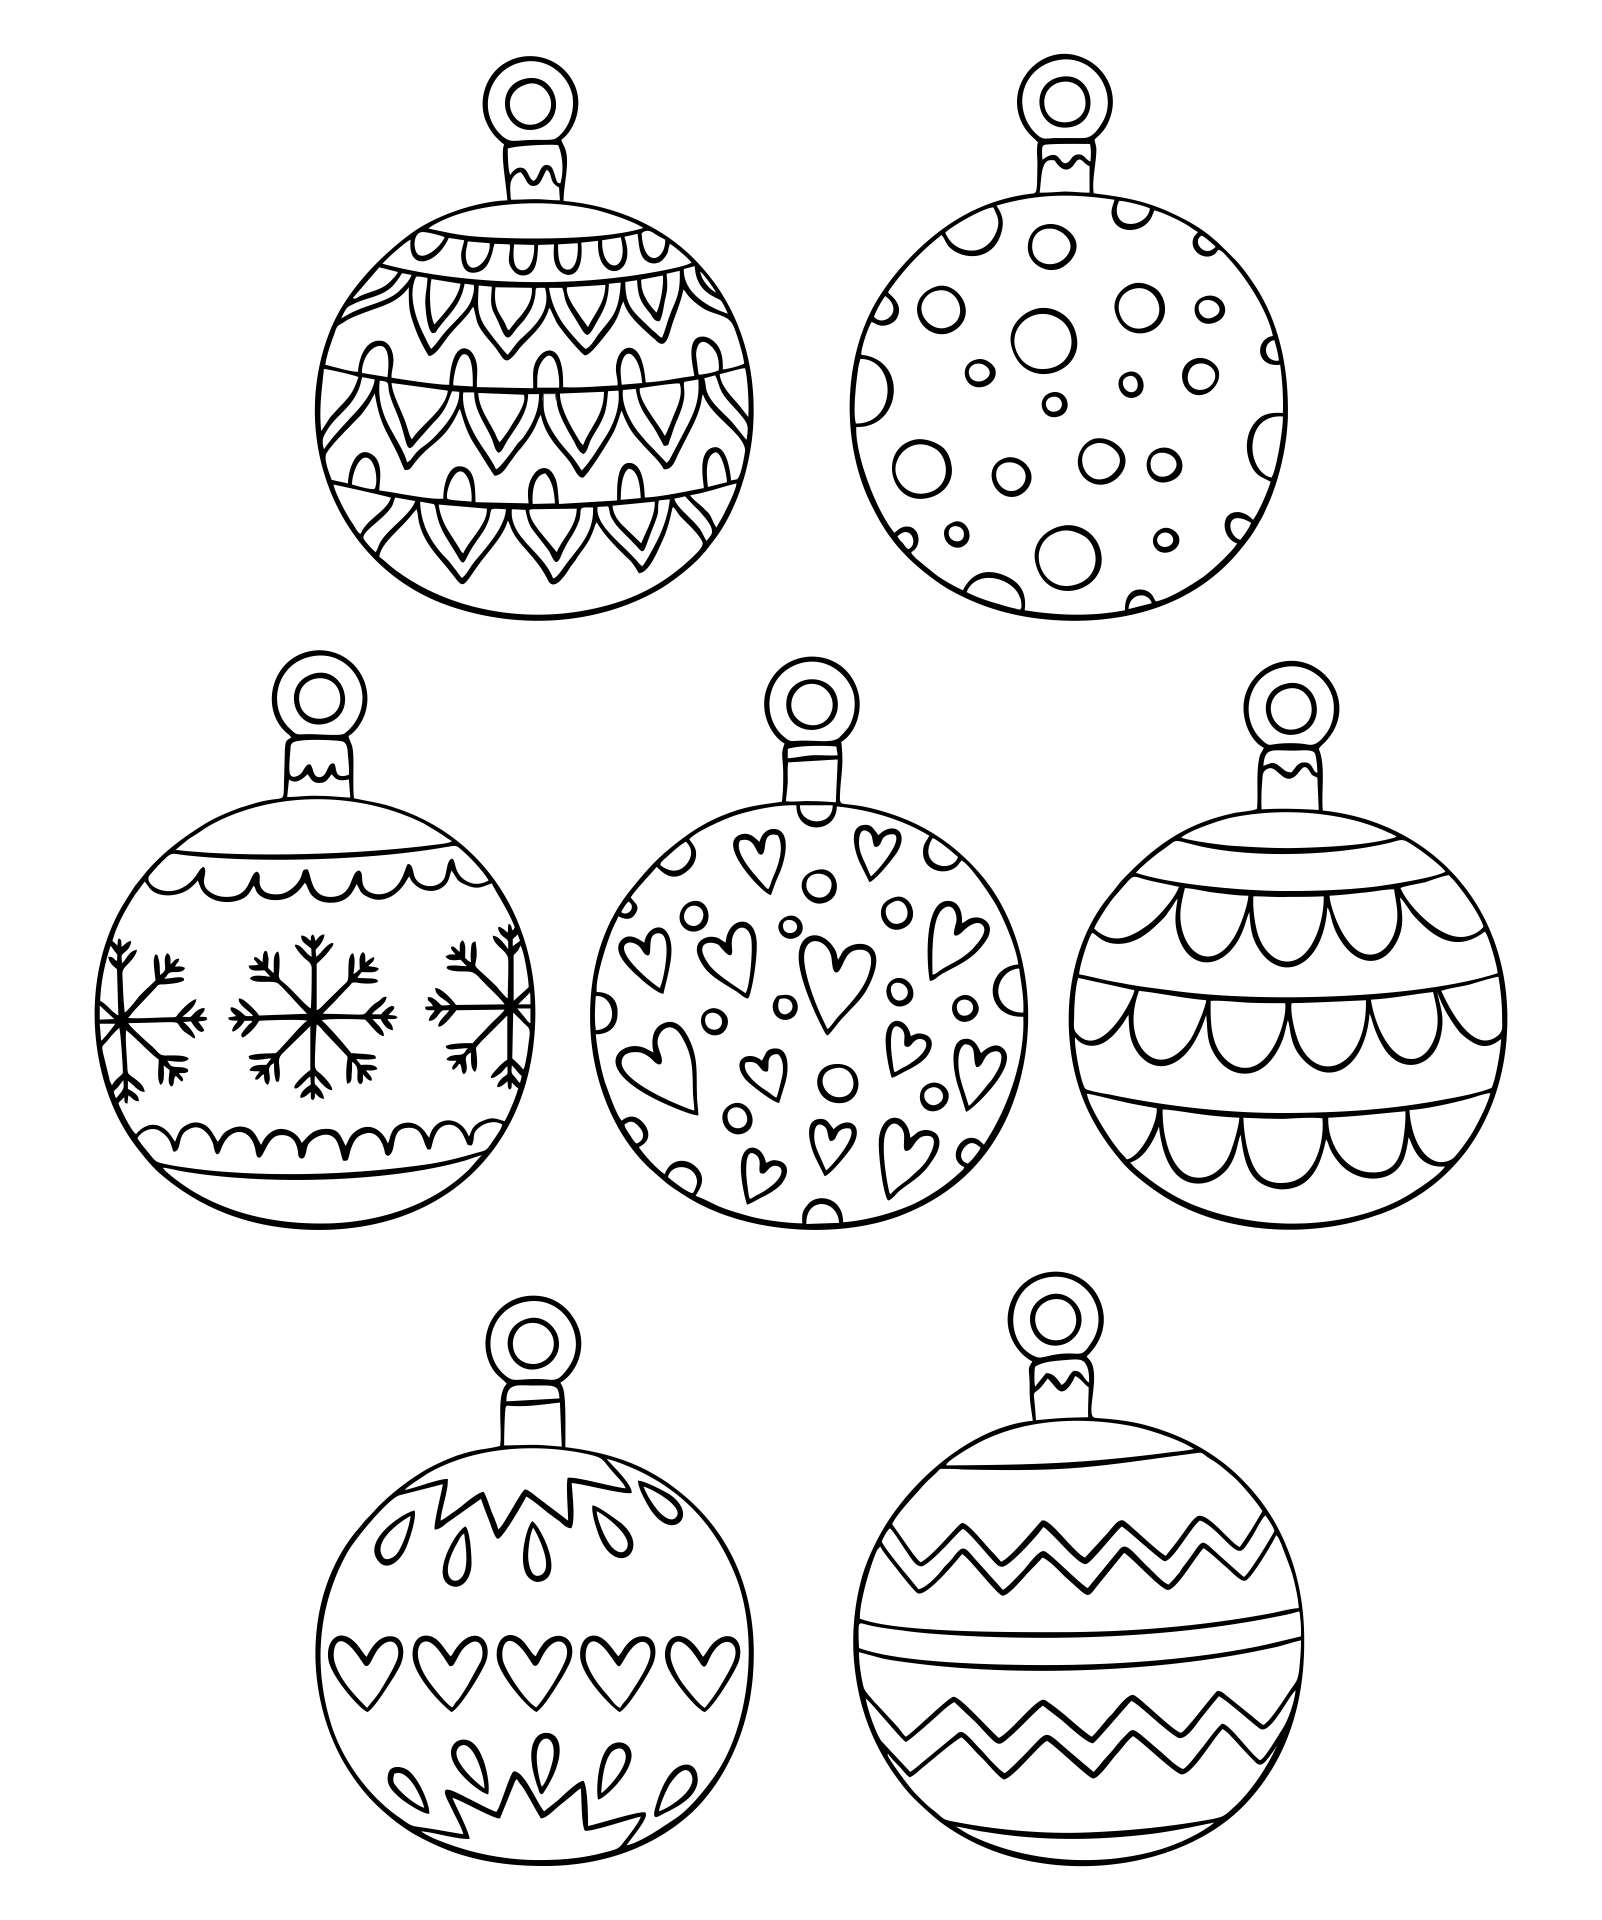 6 Best Images of Preschool Printable Christmas Ornaments Free